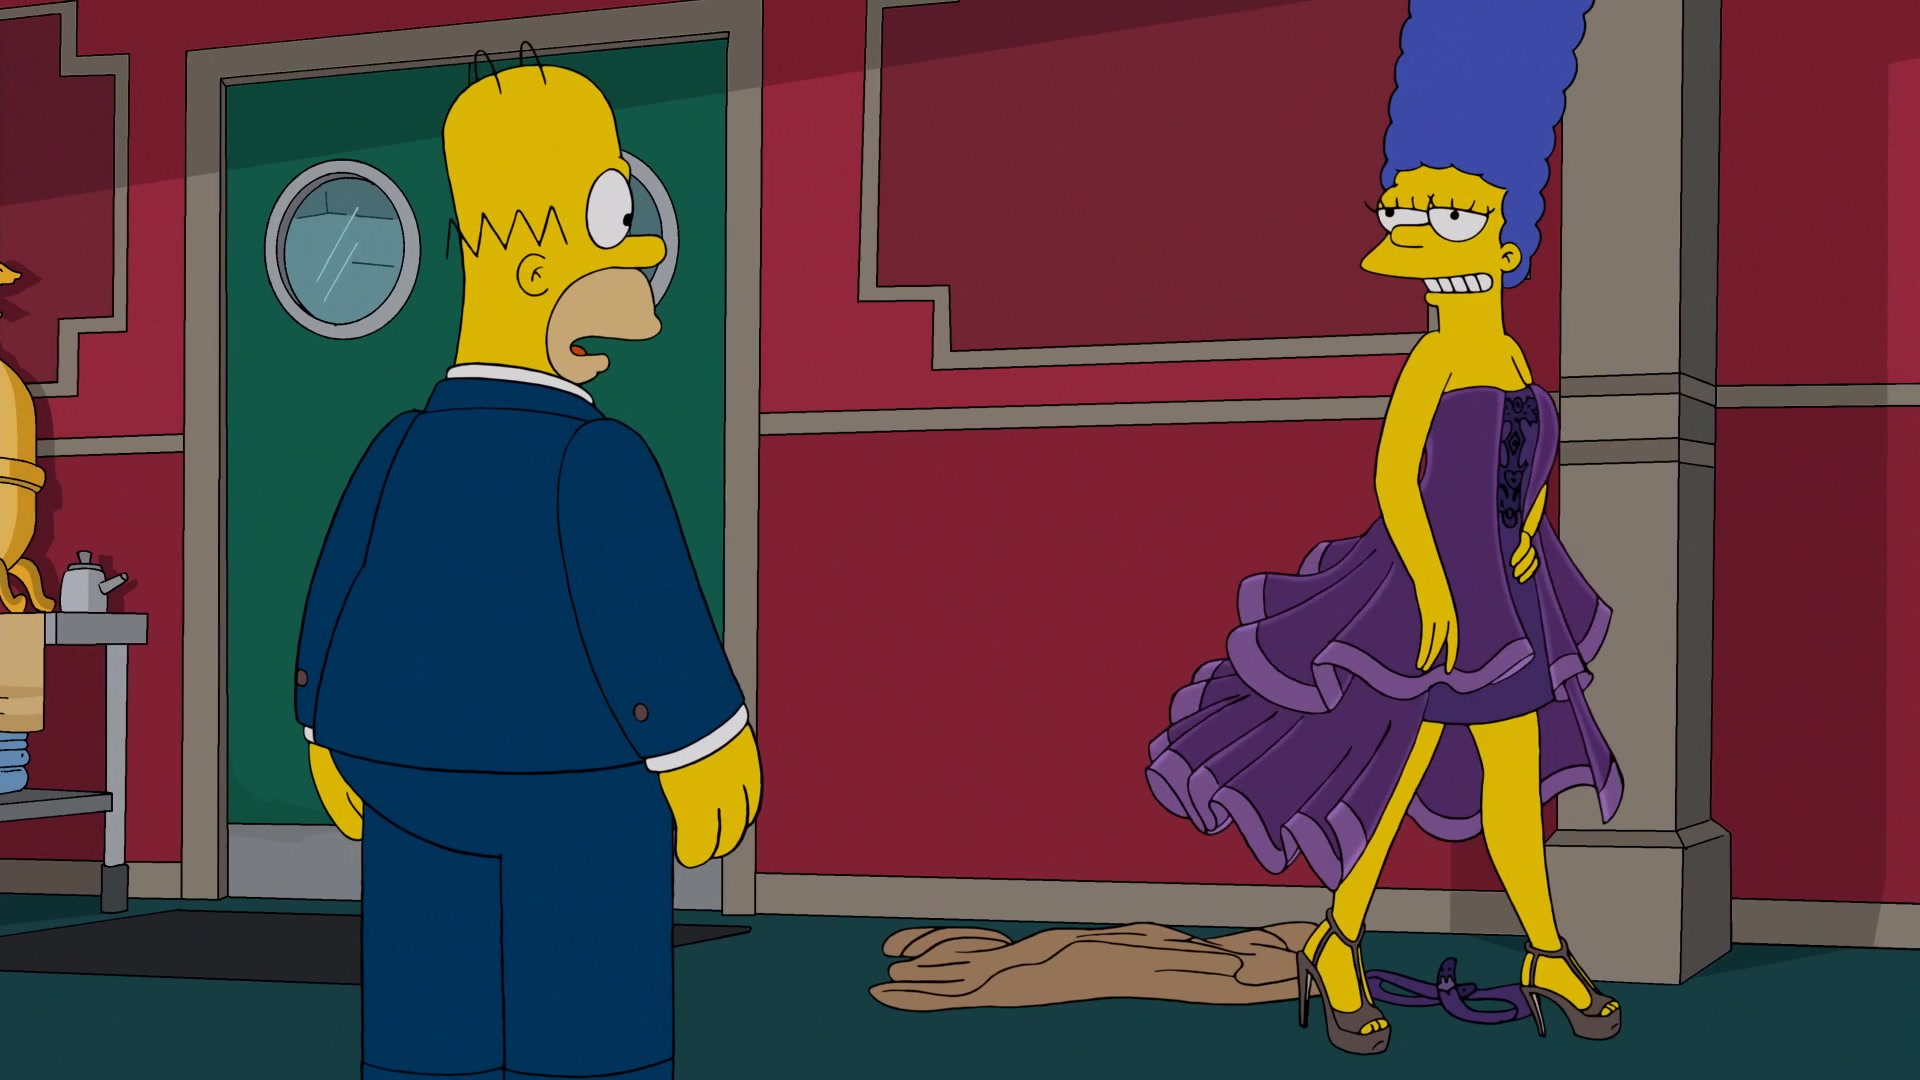 The Simpsons Season 25 Image Fancaps